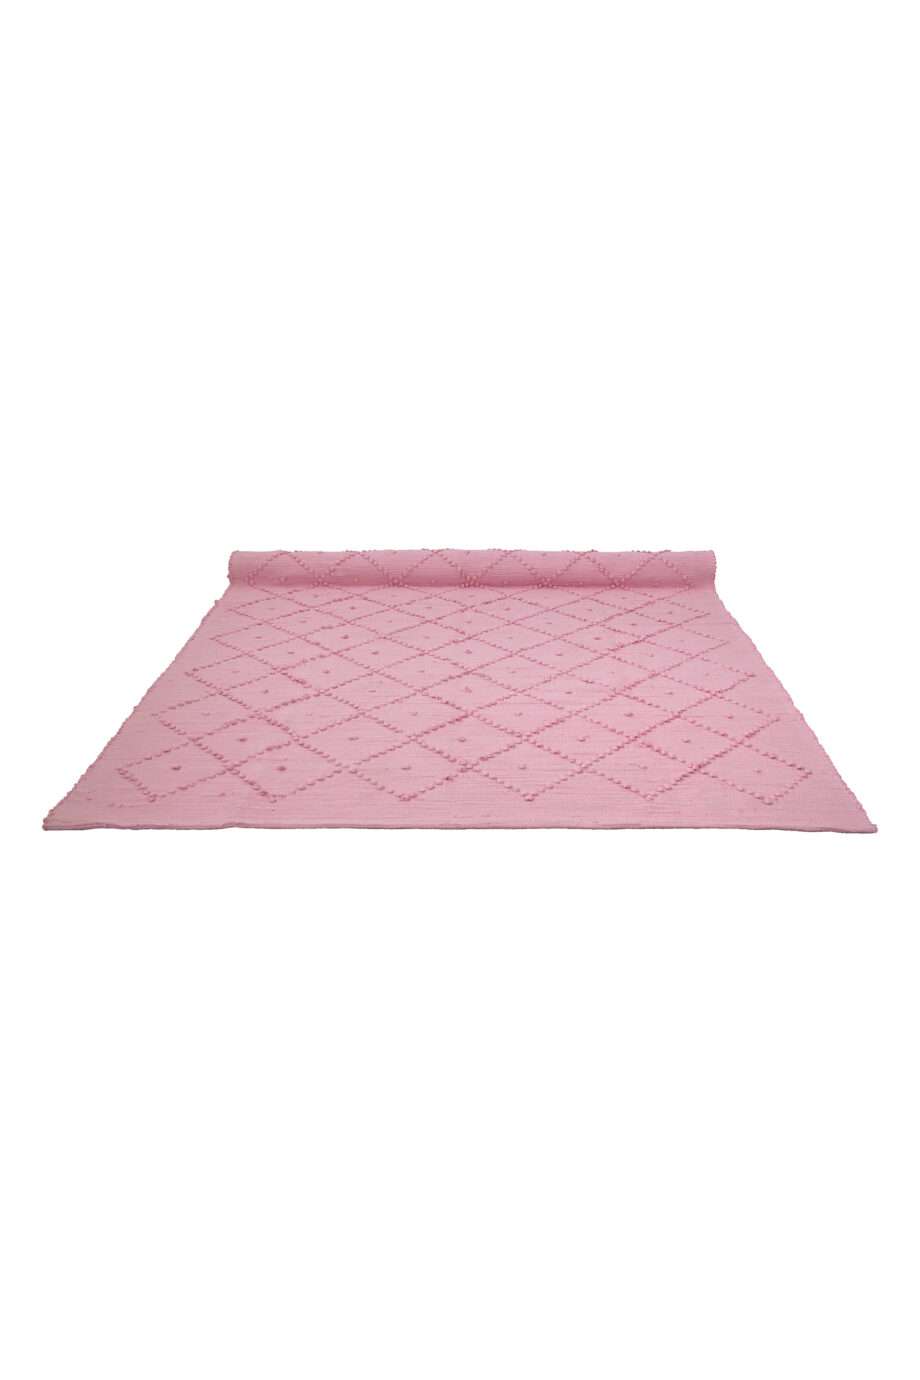 diamond fluor pink woven cotton rug xlarge